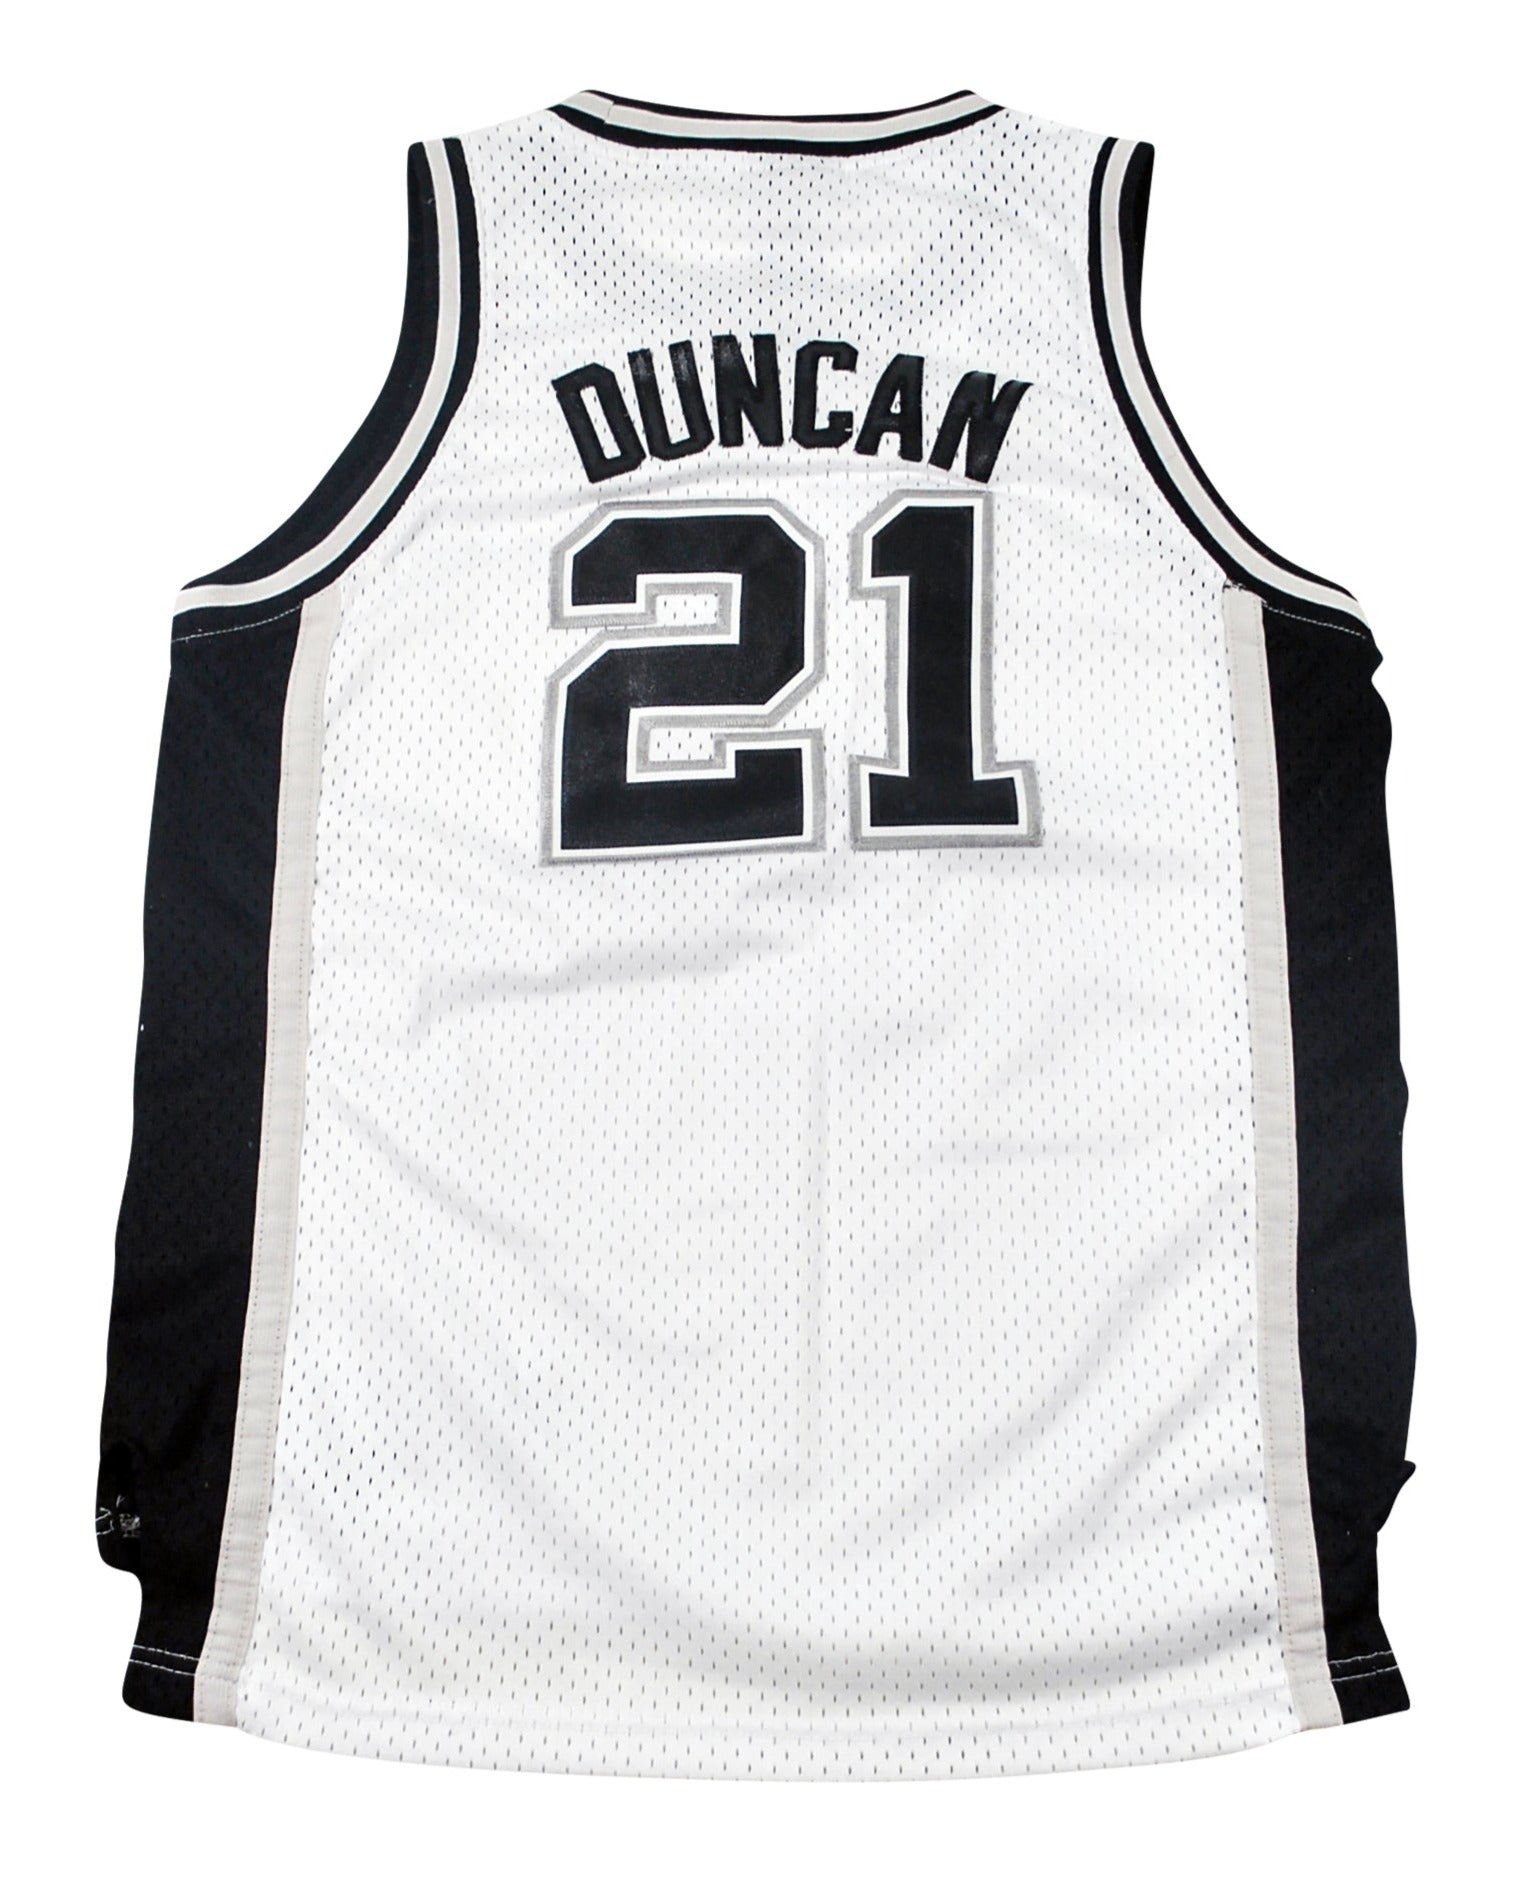 Tim Duncan #21 San Antonio Spurs Champion NBA Jersey Youth XL 18-20 RARE